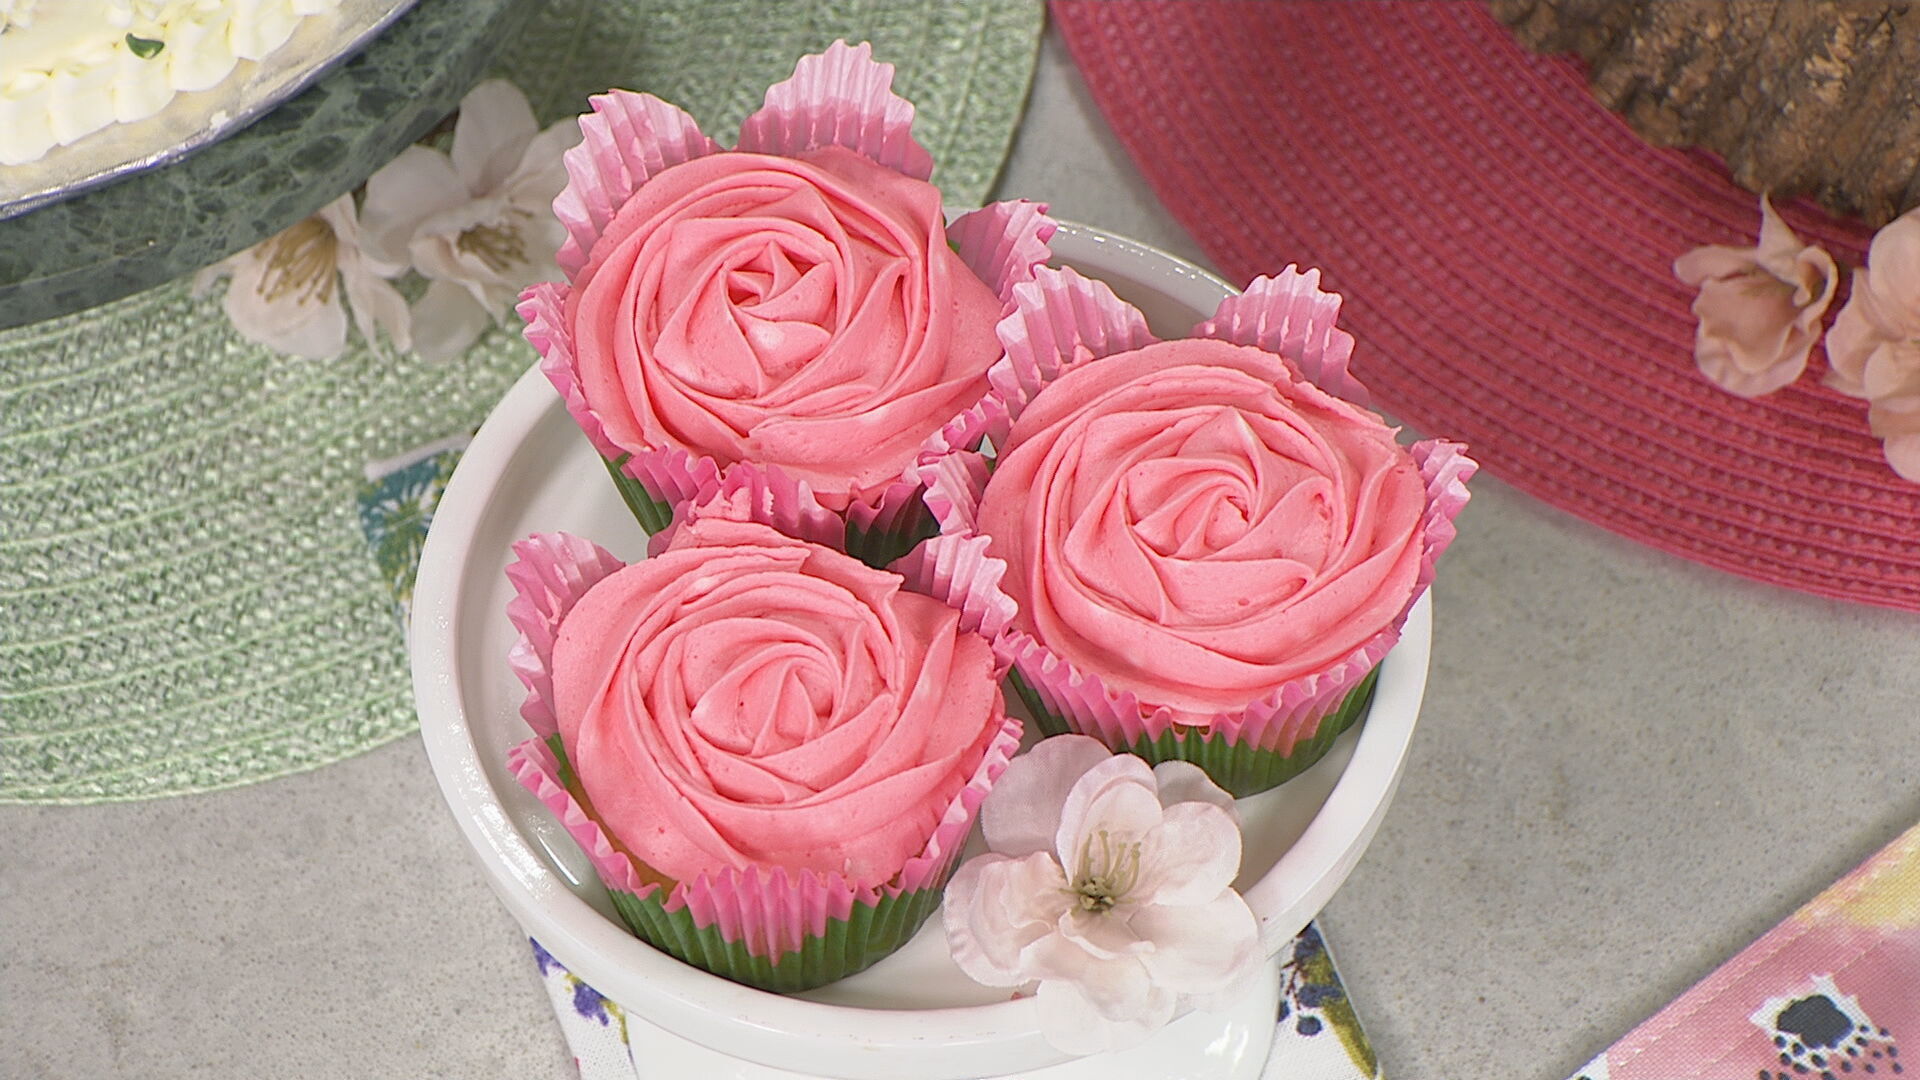 Floral rose cupcakes